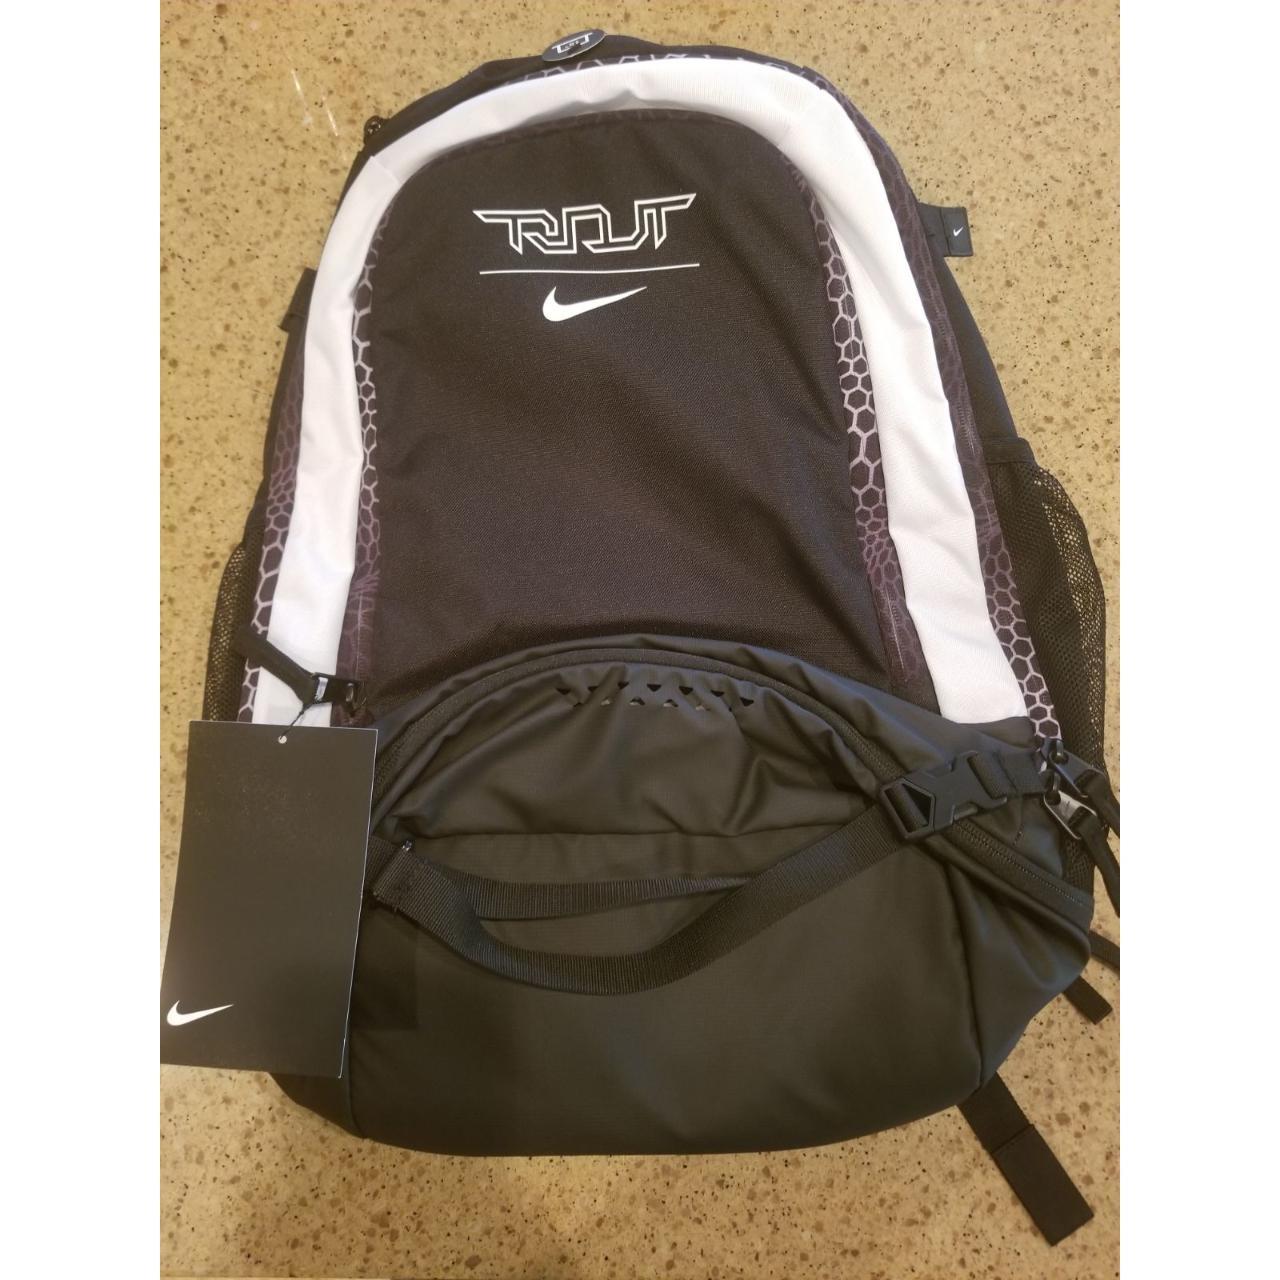 Nike Trout Vapor Baseball Backpack.